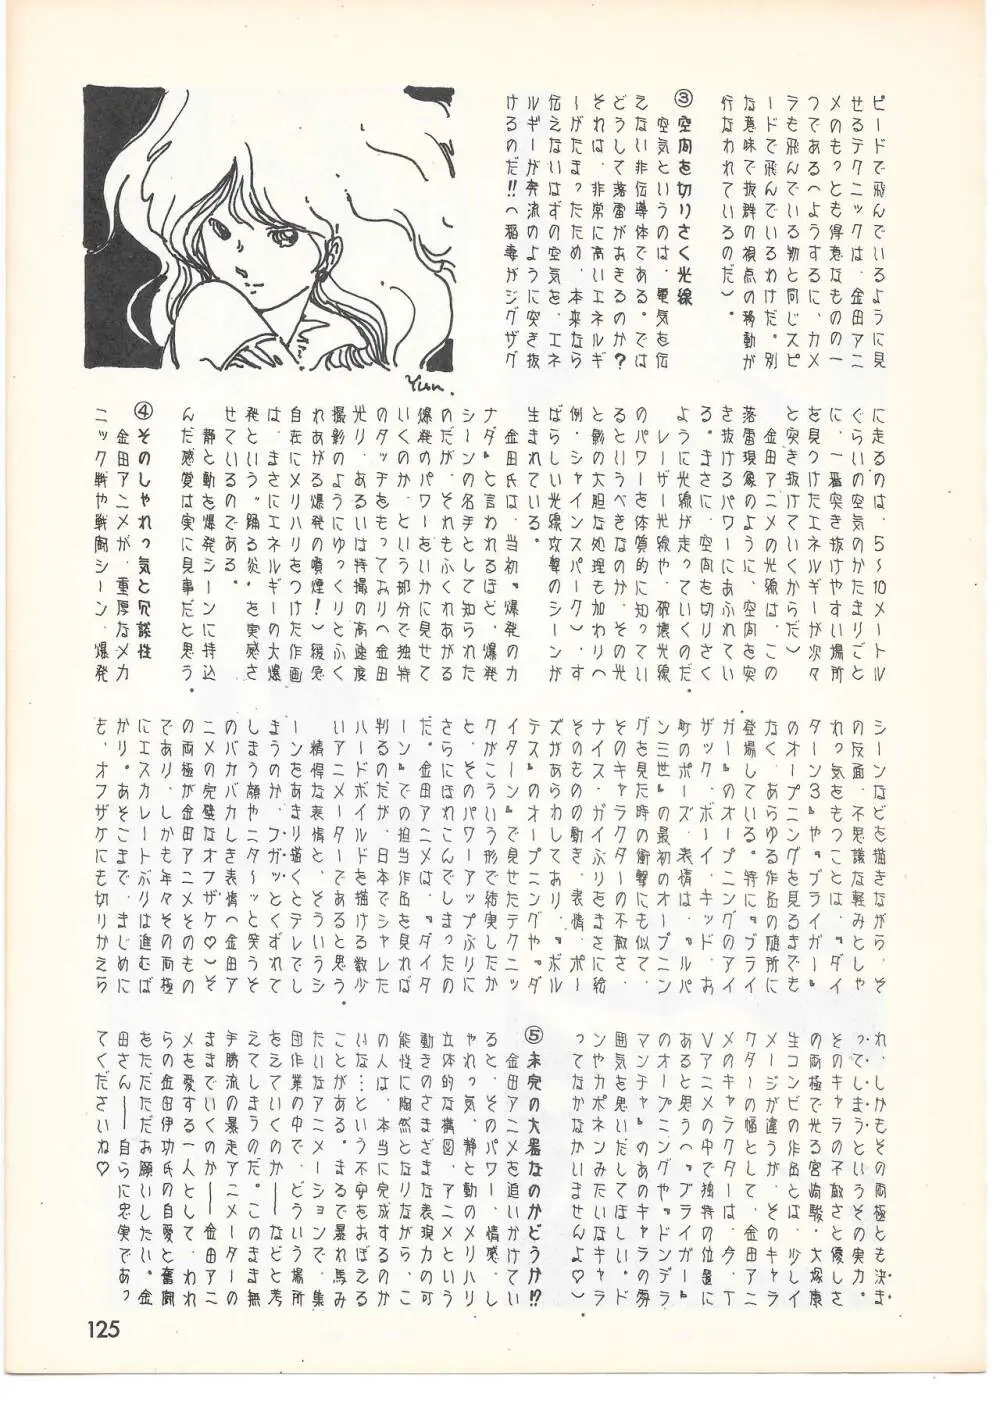 THE ANIMATOR 1 金田伊功特集号 - page120